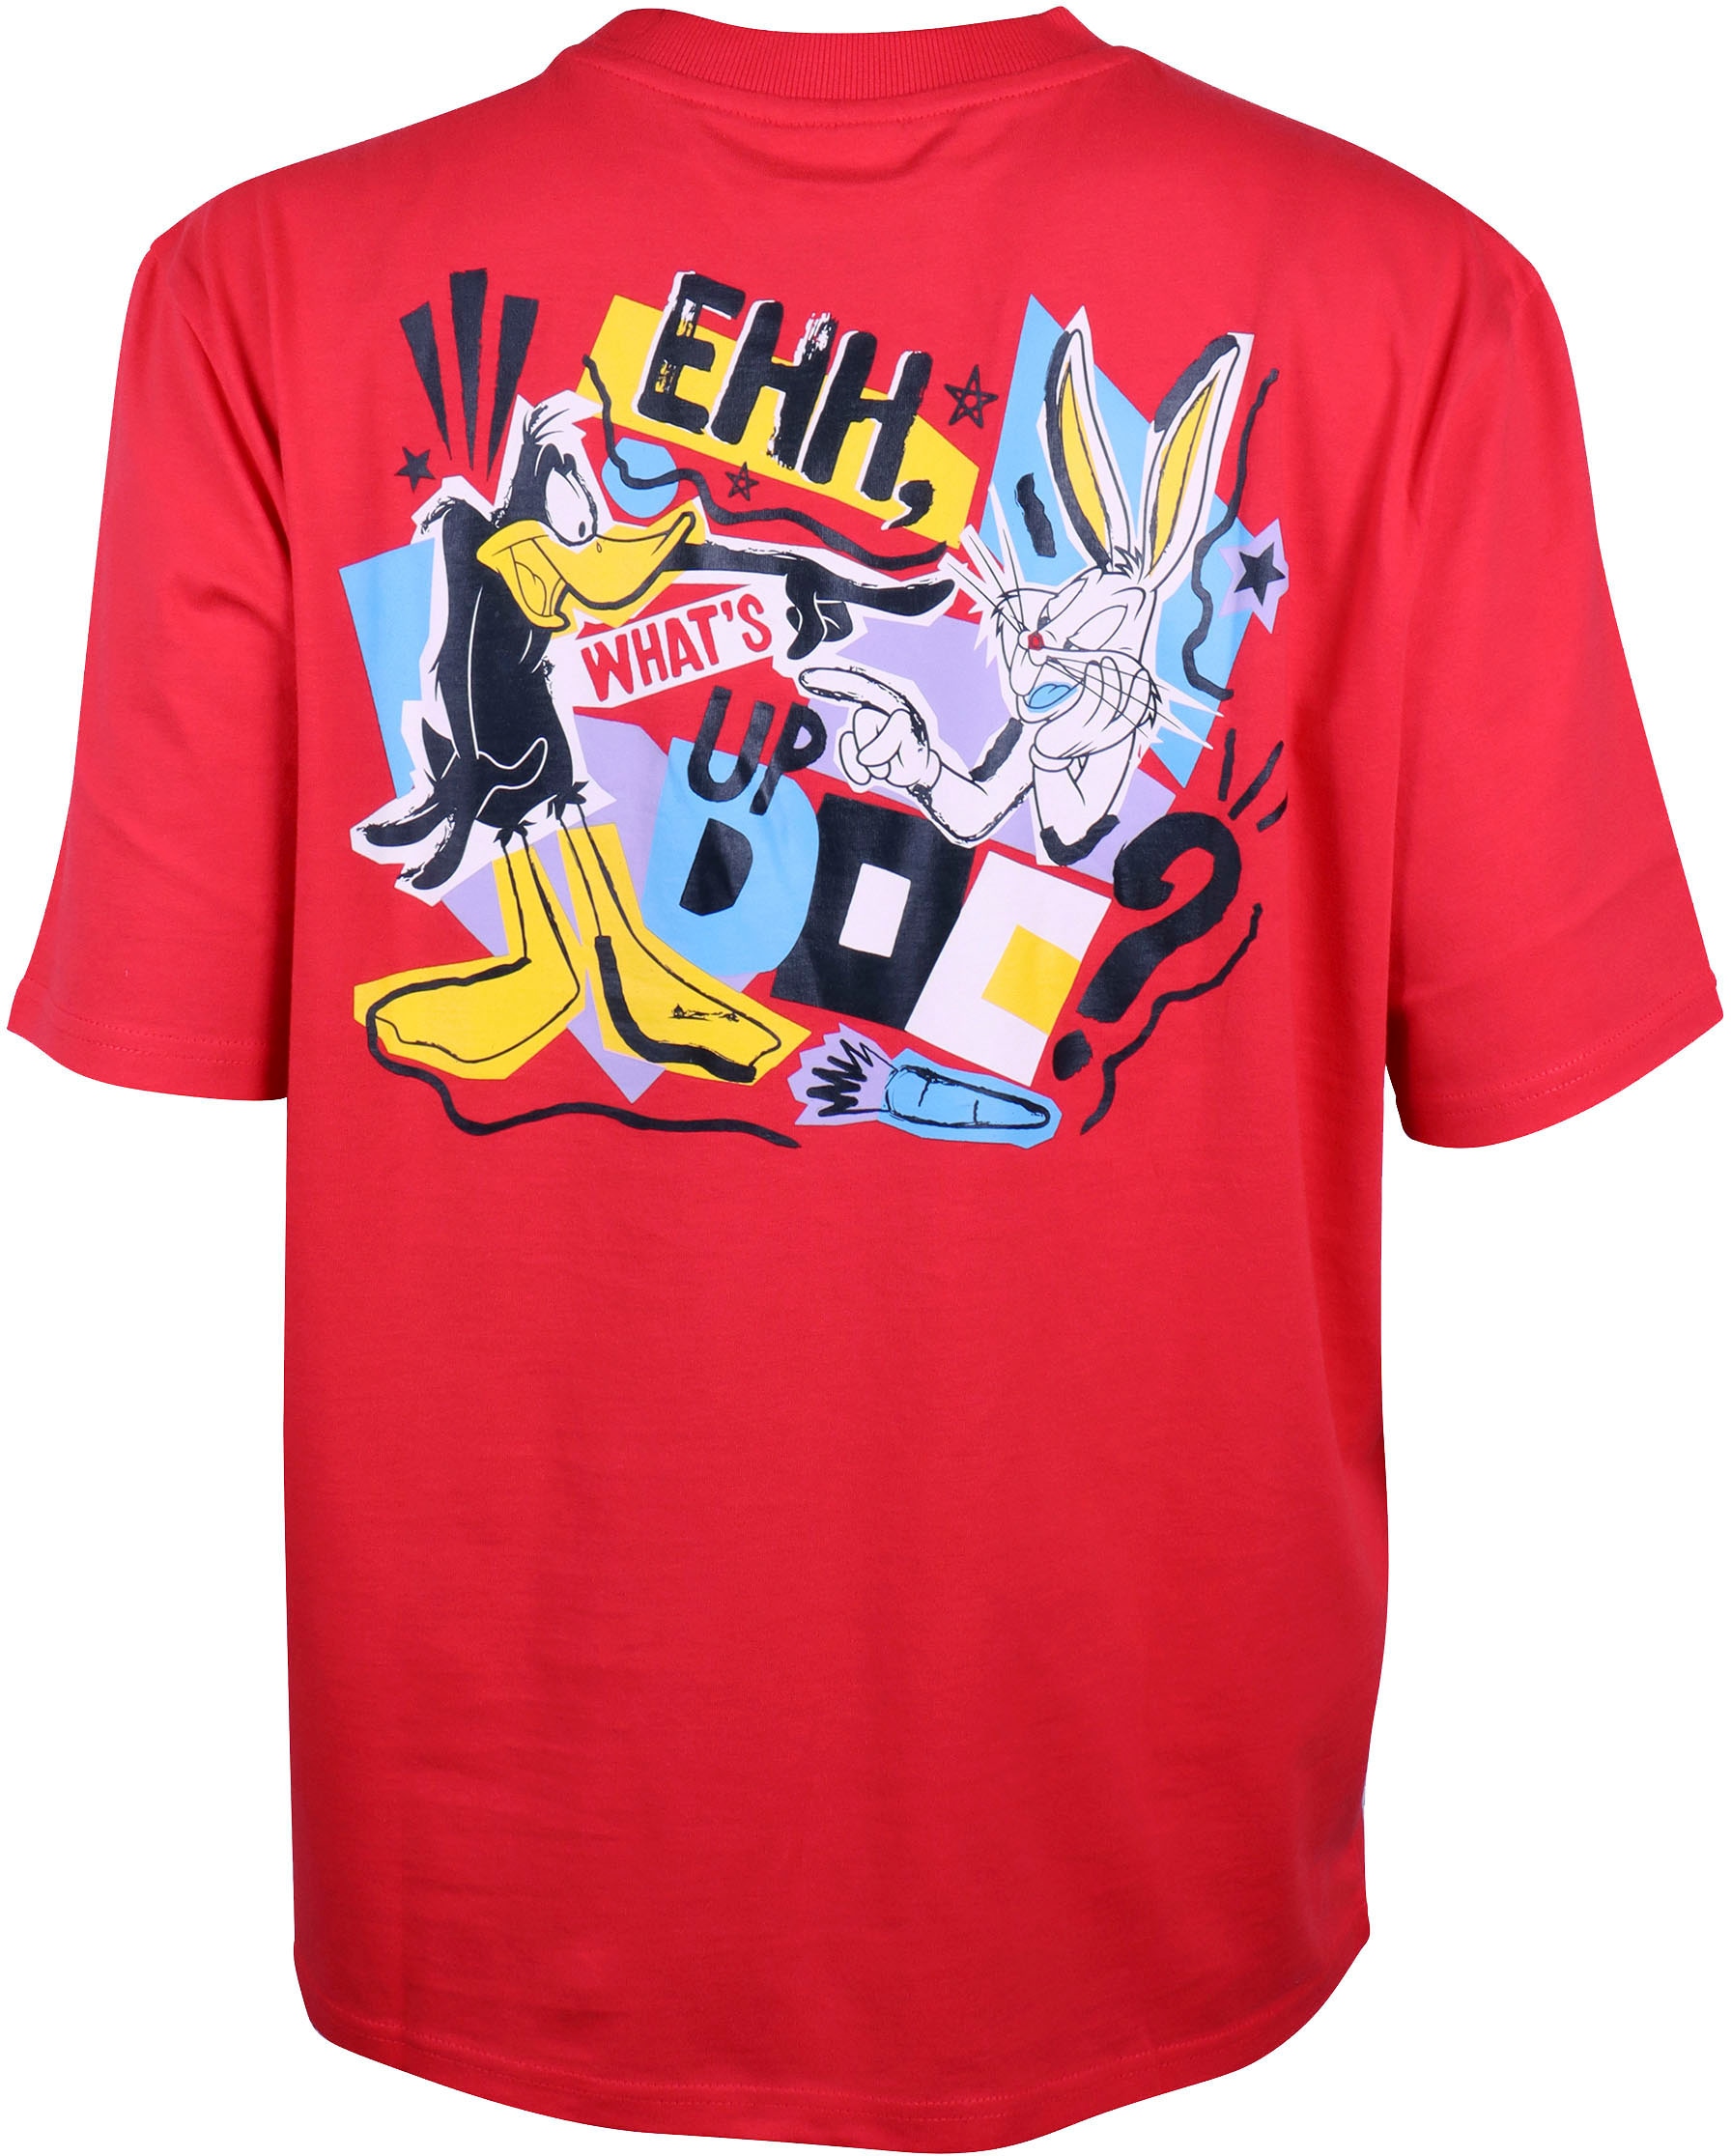 Capelli New York T-Shirt, mit online Comic-Motiv Duffy mit Duck kaufen Bugs Bunny